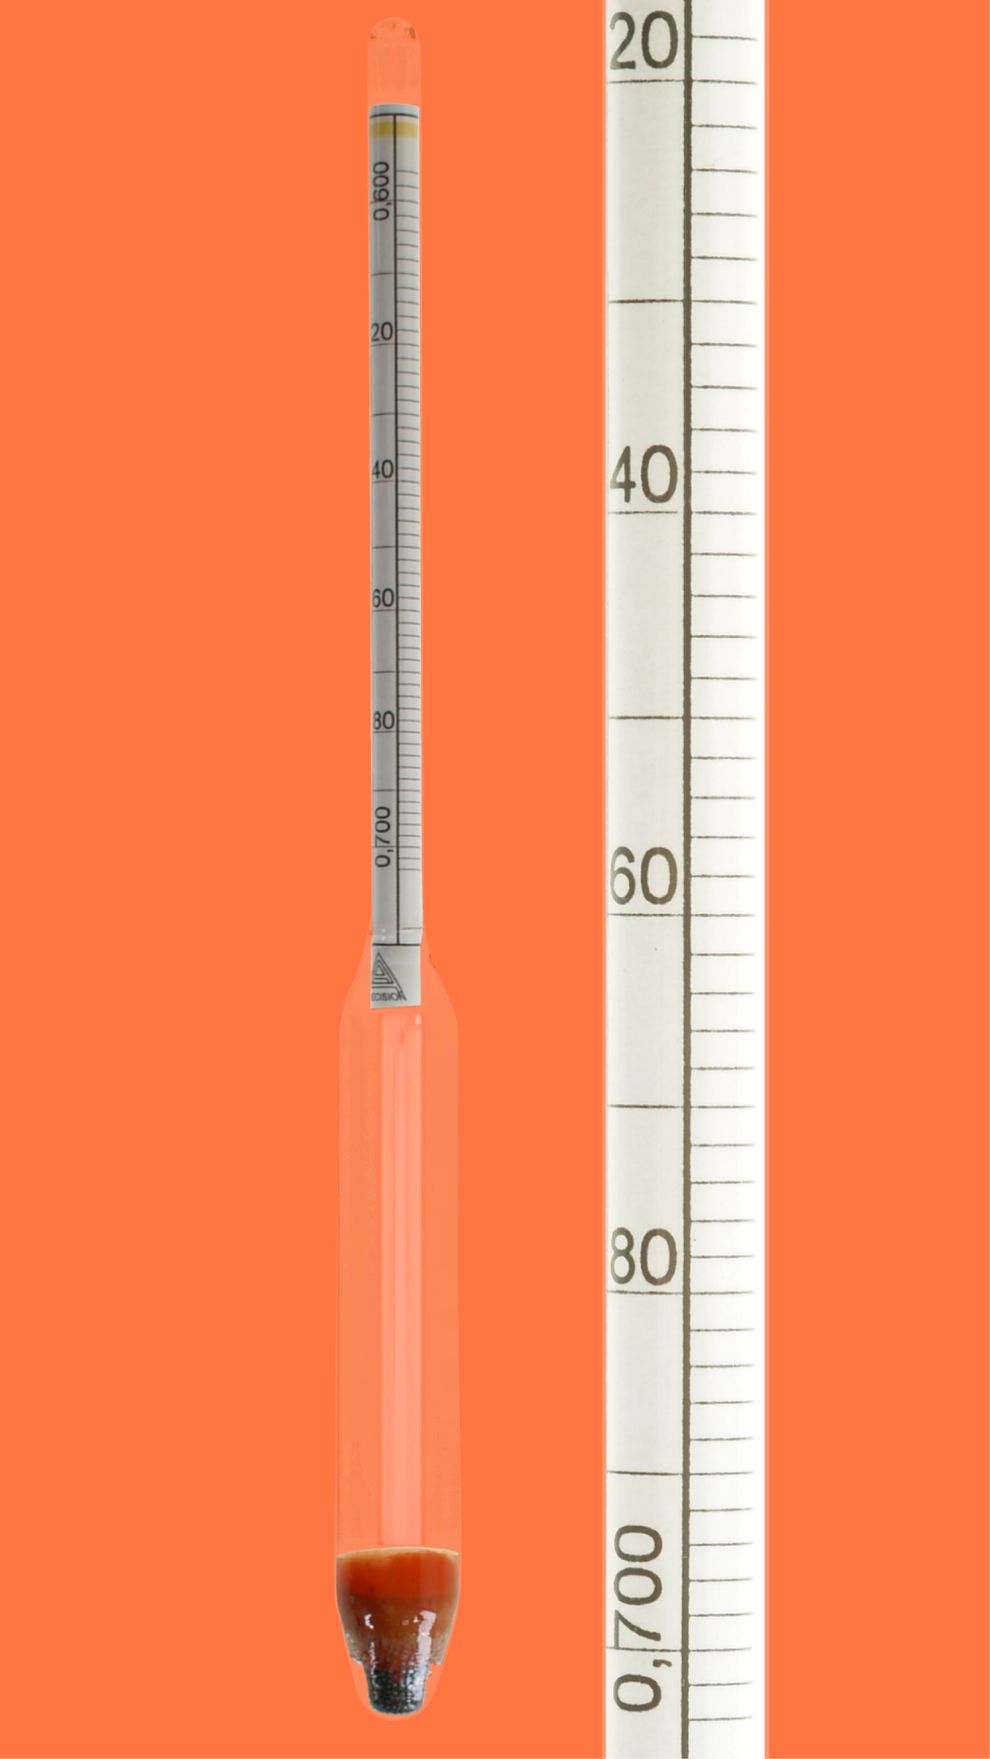 Aräometer, DIN 12791, M100, 0,70-0,80:0,0020g/cm³, Bezugstemp. 20°C, ohne Thermometer